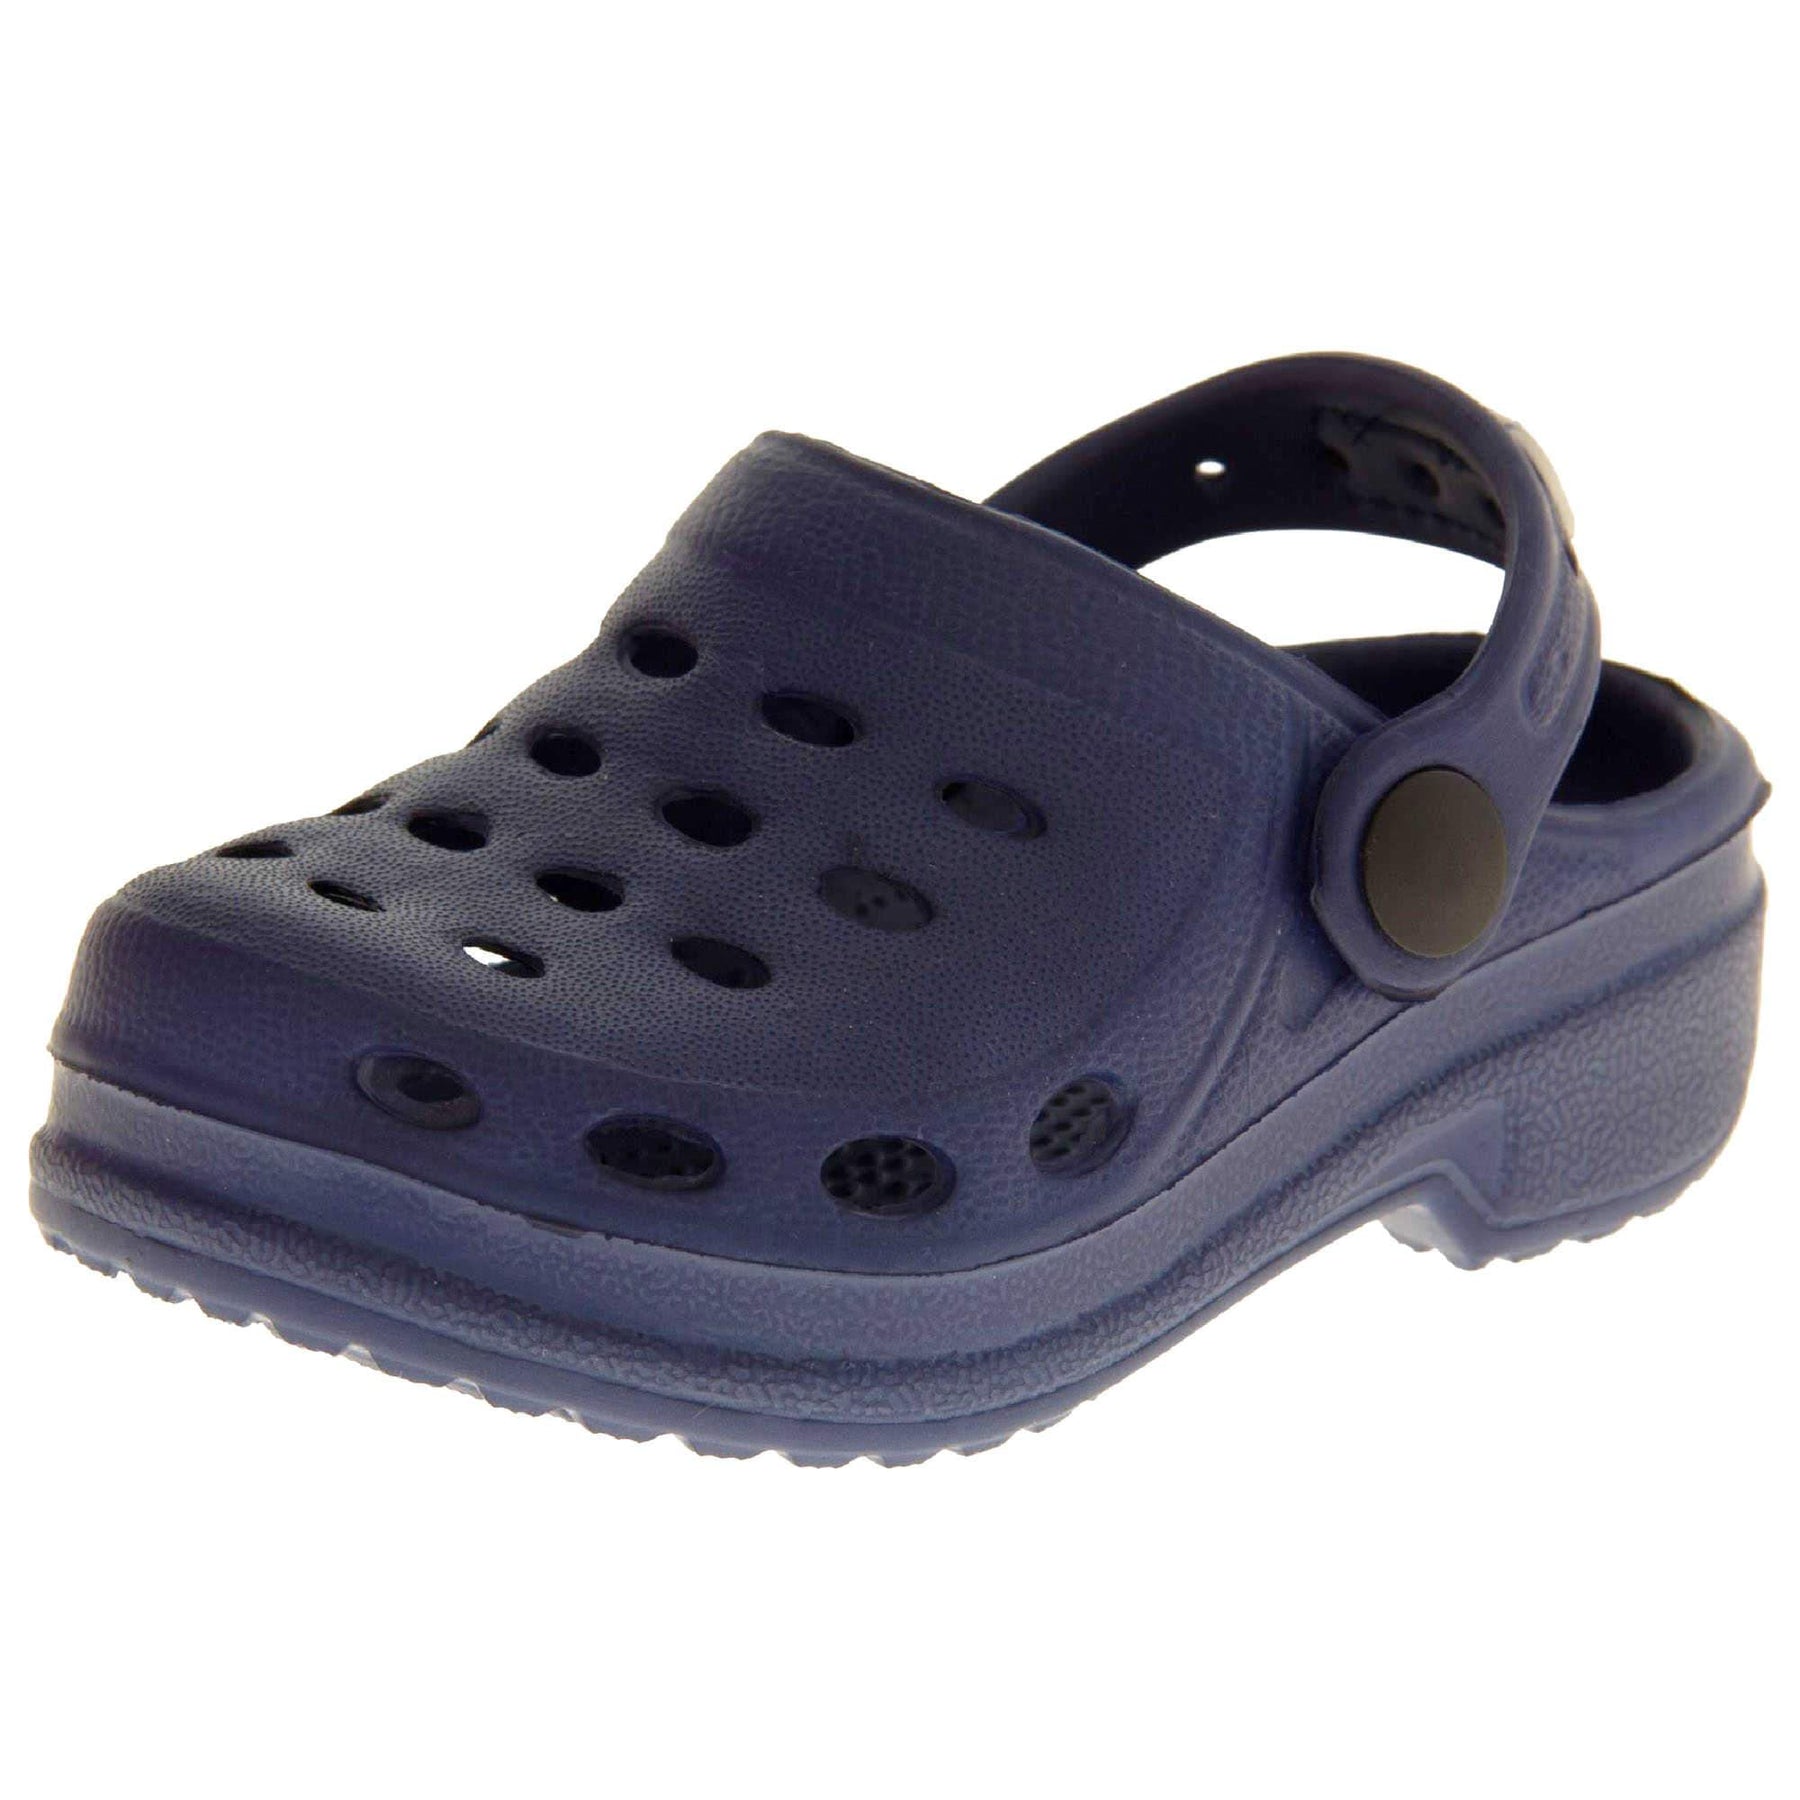 Kids Beach Clogs Blue | Boys Girls Pool Shoes Navy Sandals – Footwear ...